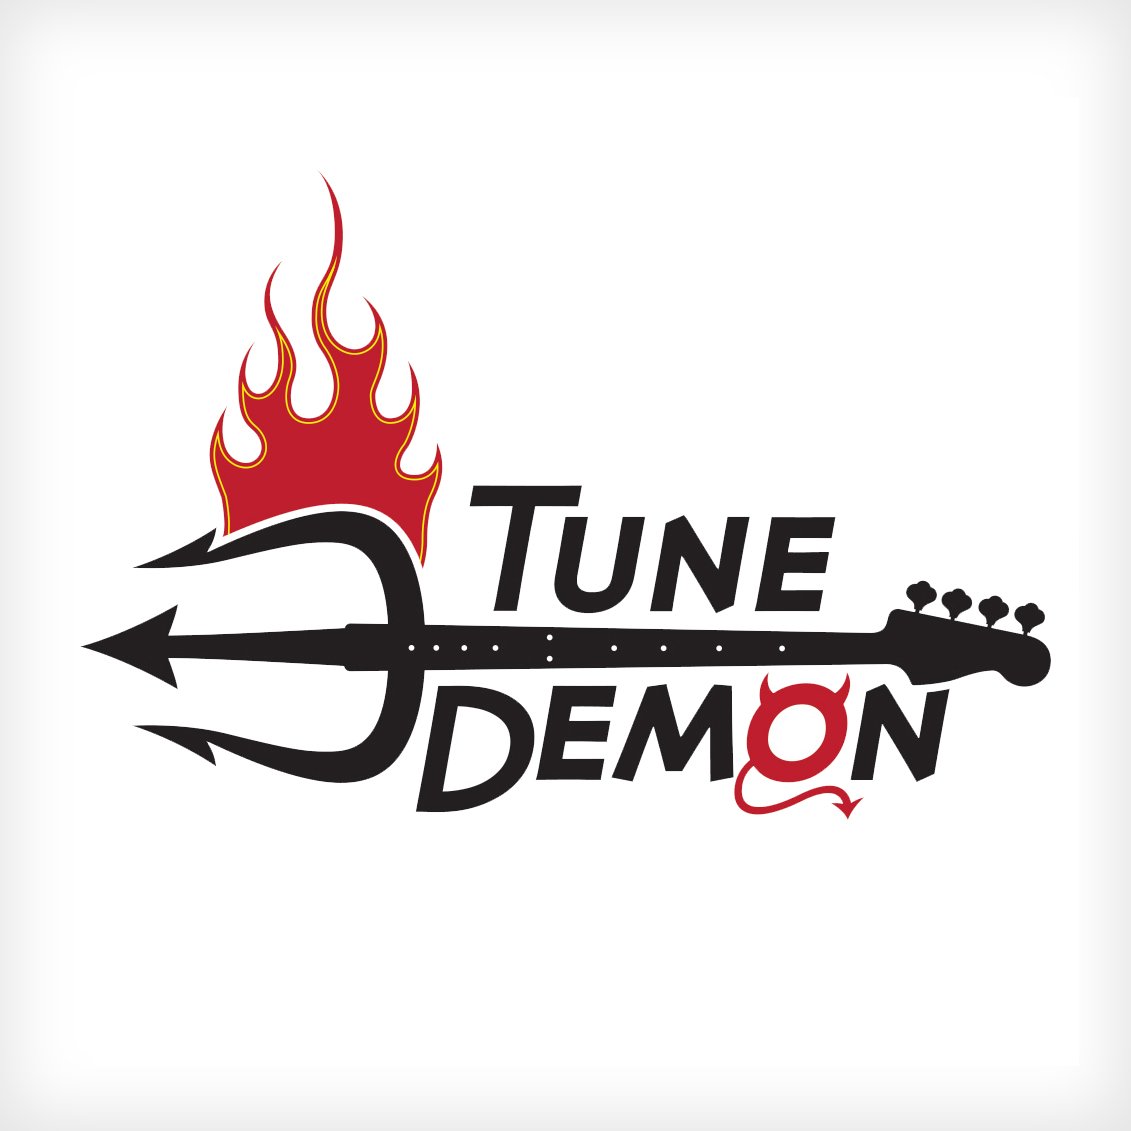 "Tune Demon" Logo